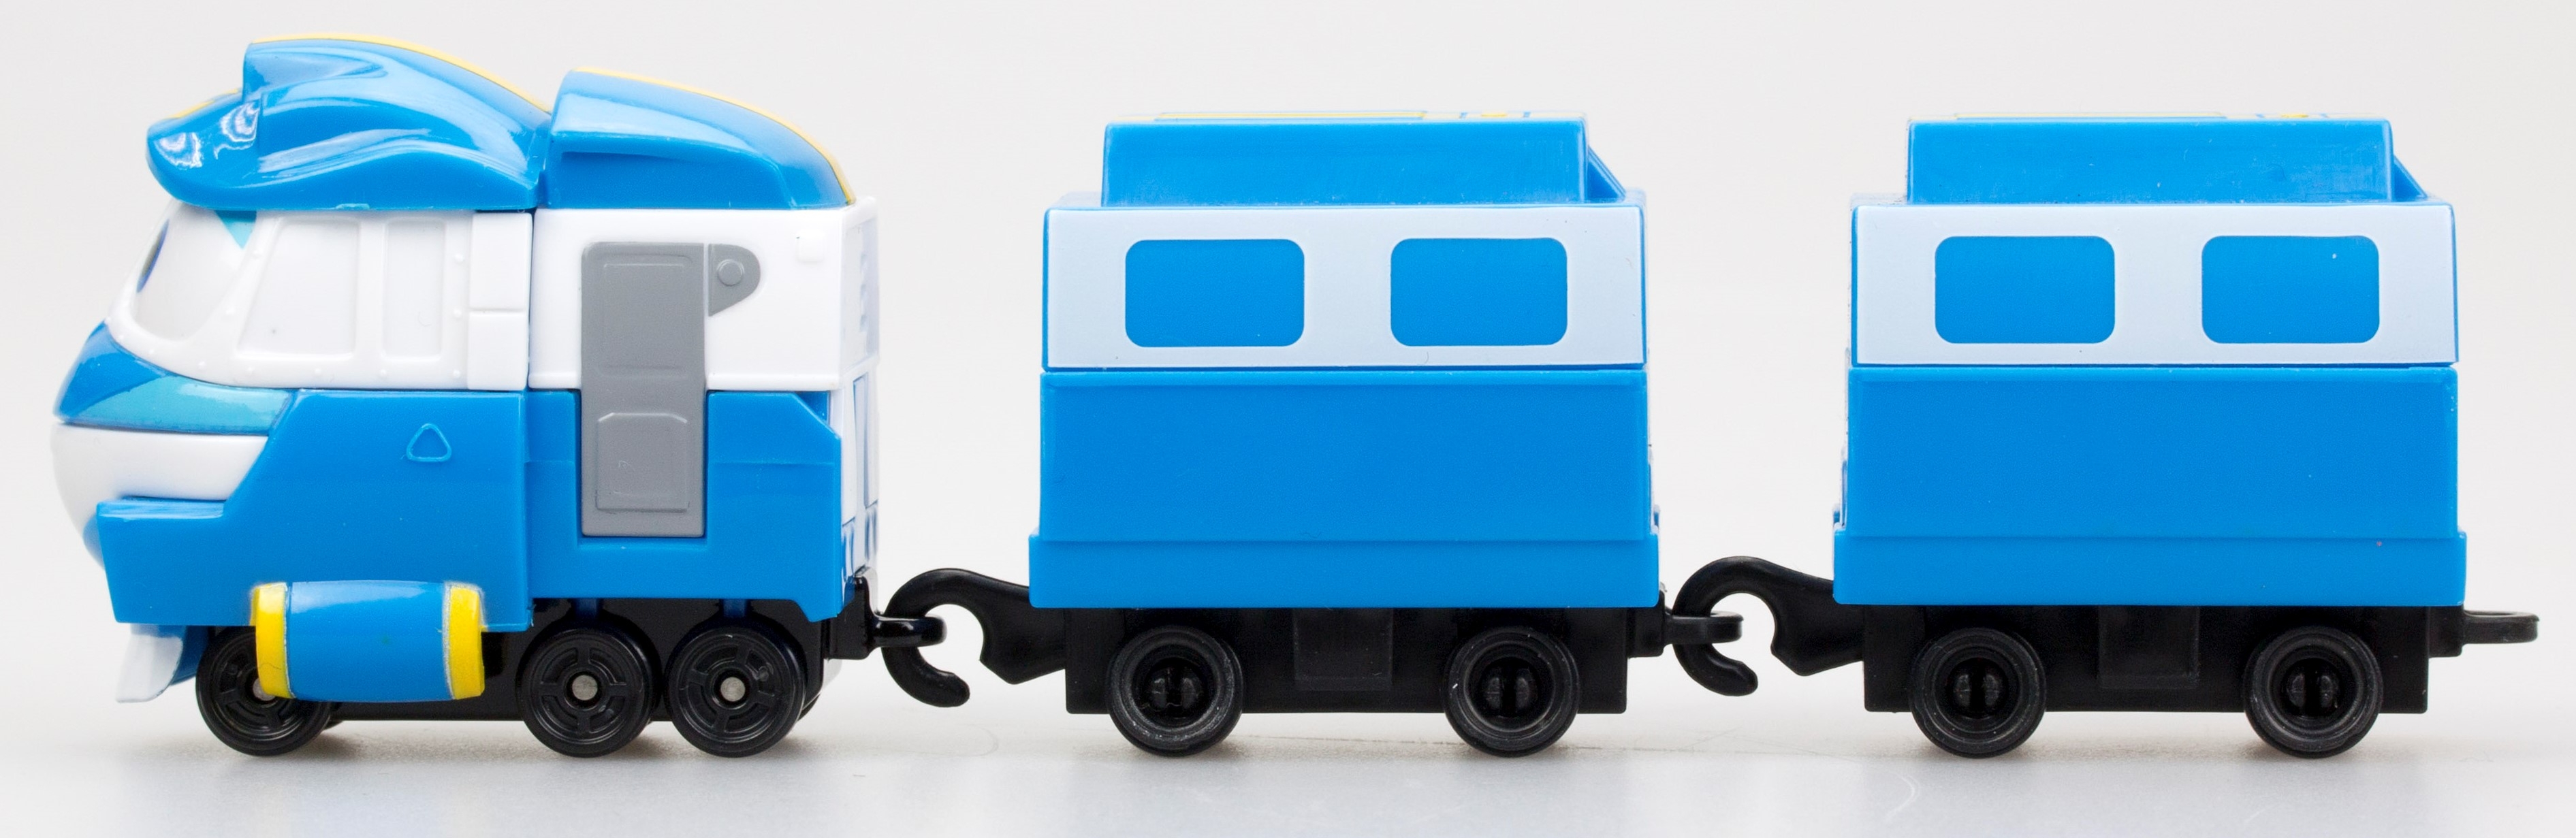 Паровозик з двома вагонами Silverlit Robot Trains Кей (80176) - фото 2